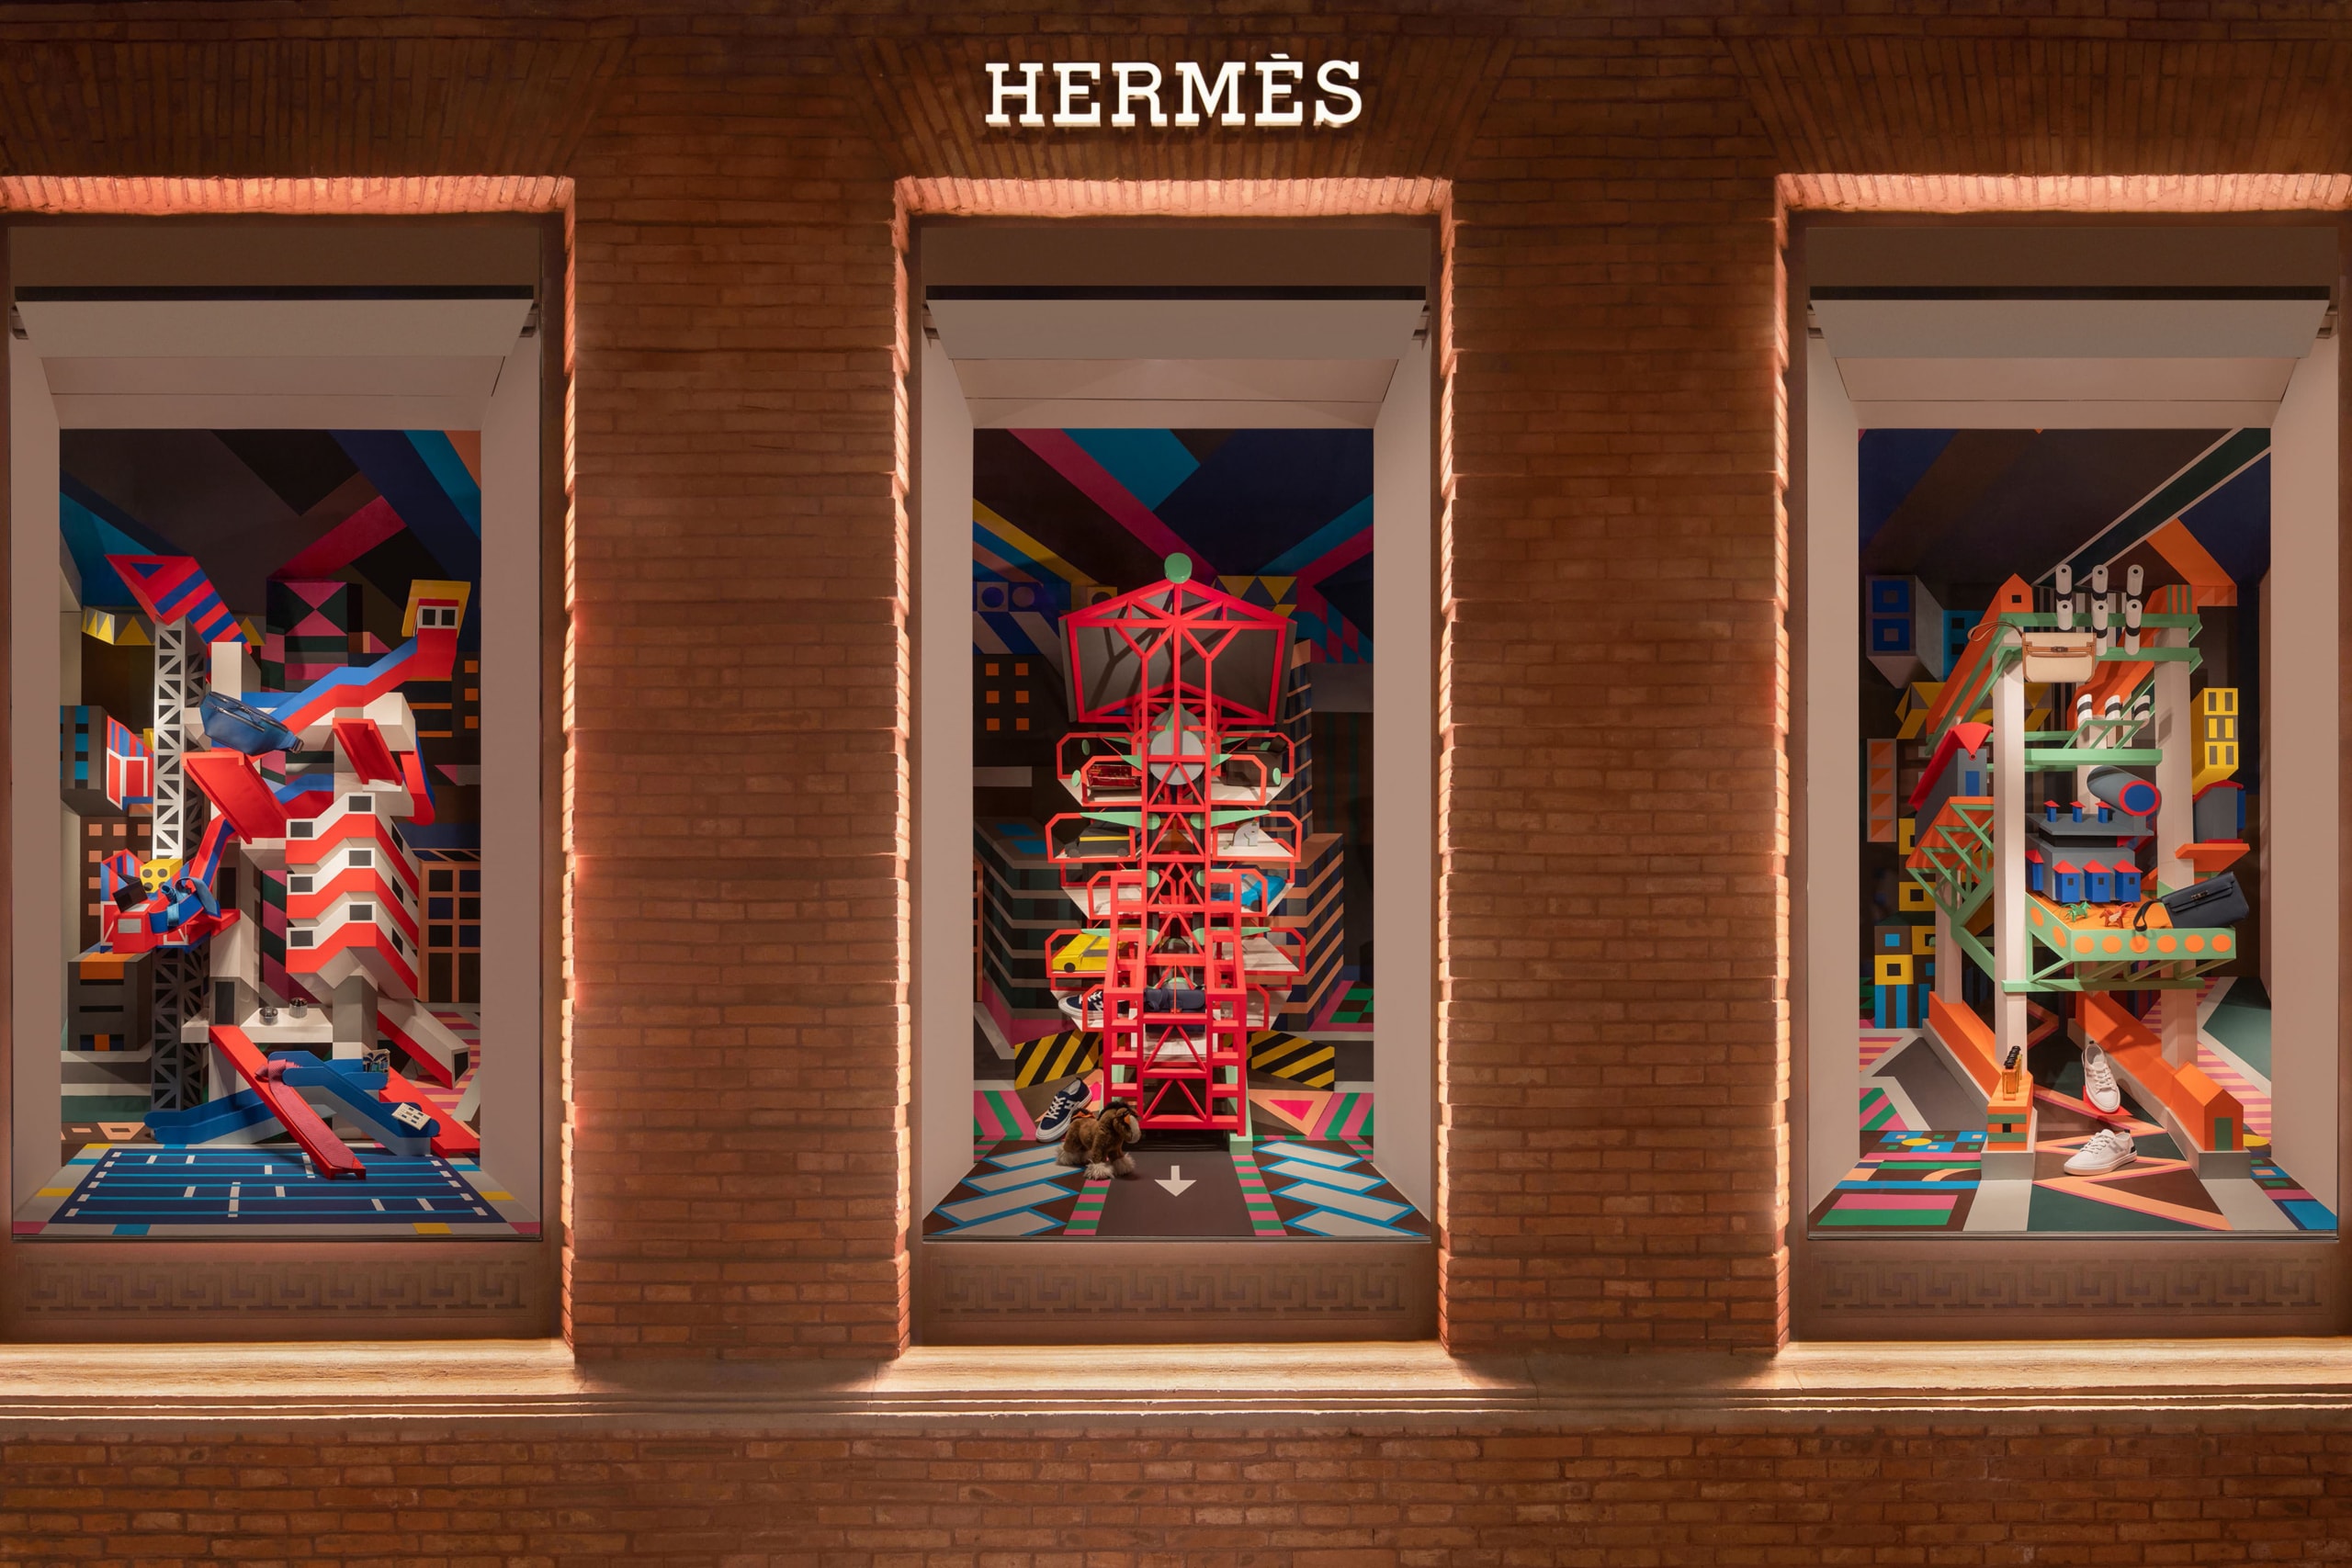 HERMÈS 邀请中国艺术家李涵为上海「爱马仕之家」打造《仕物别景》夏季橱窗与《生活模型》艺术展